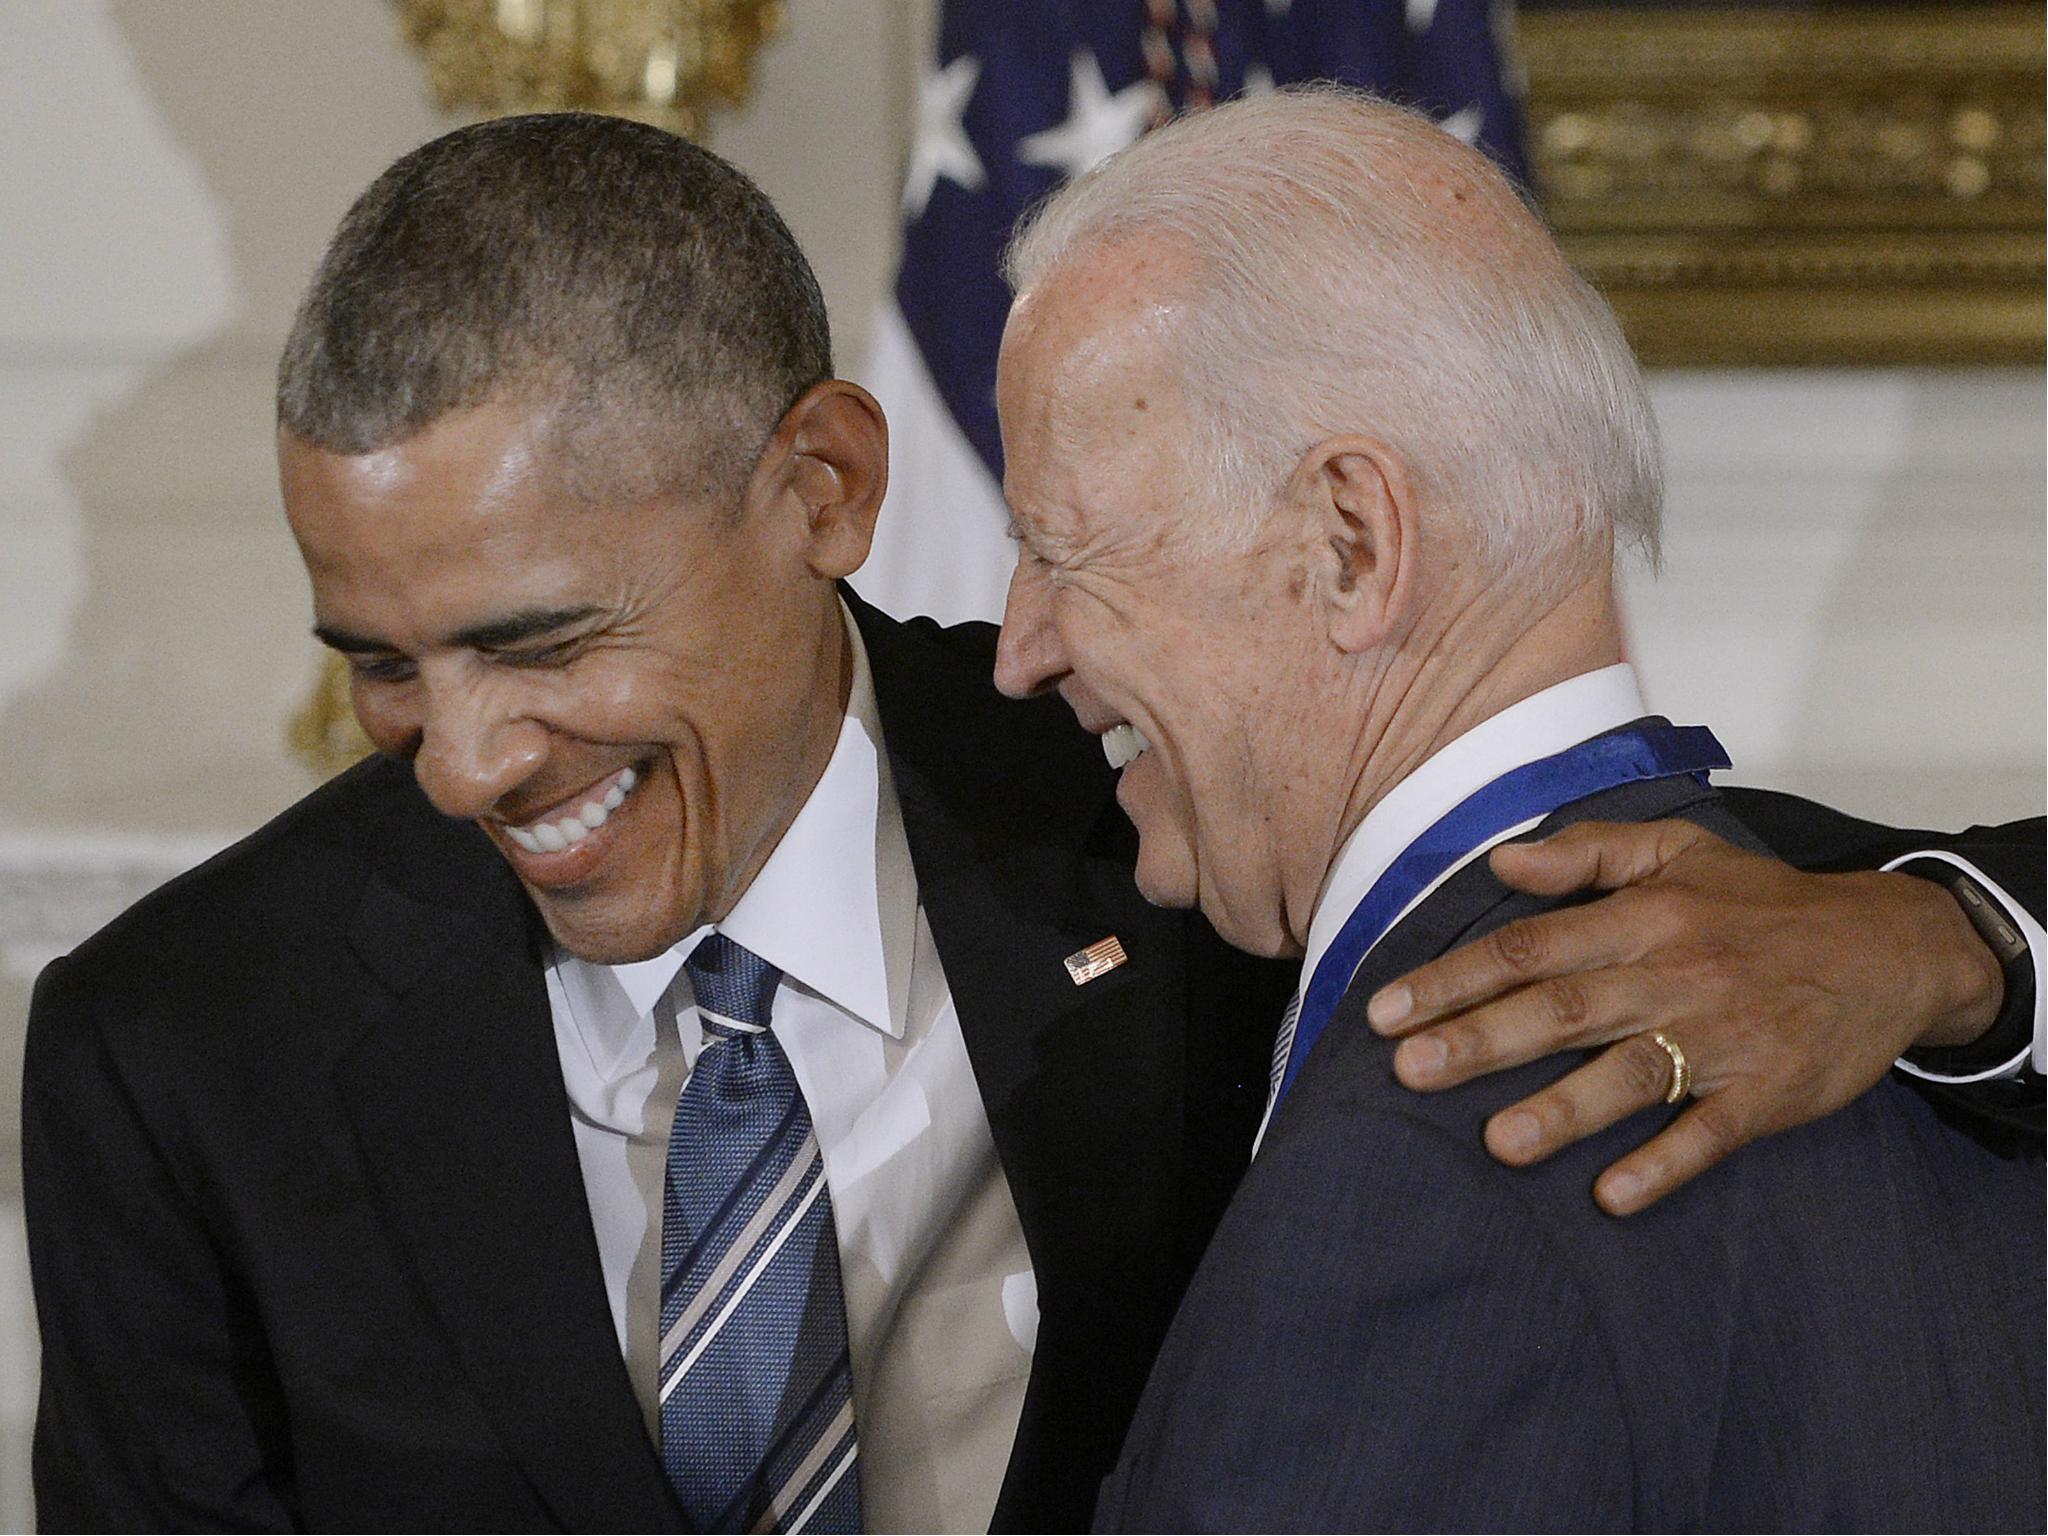 Former US President Barack Obama presents the Medal of Freedom to former Vice President Joe Biden on 12 January 2017.